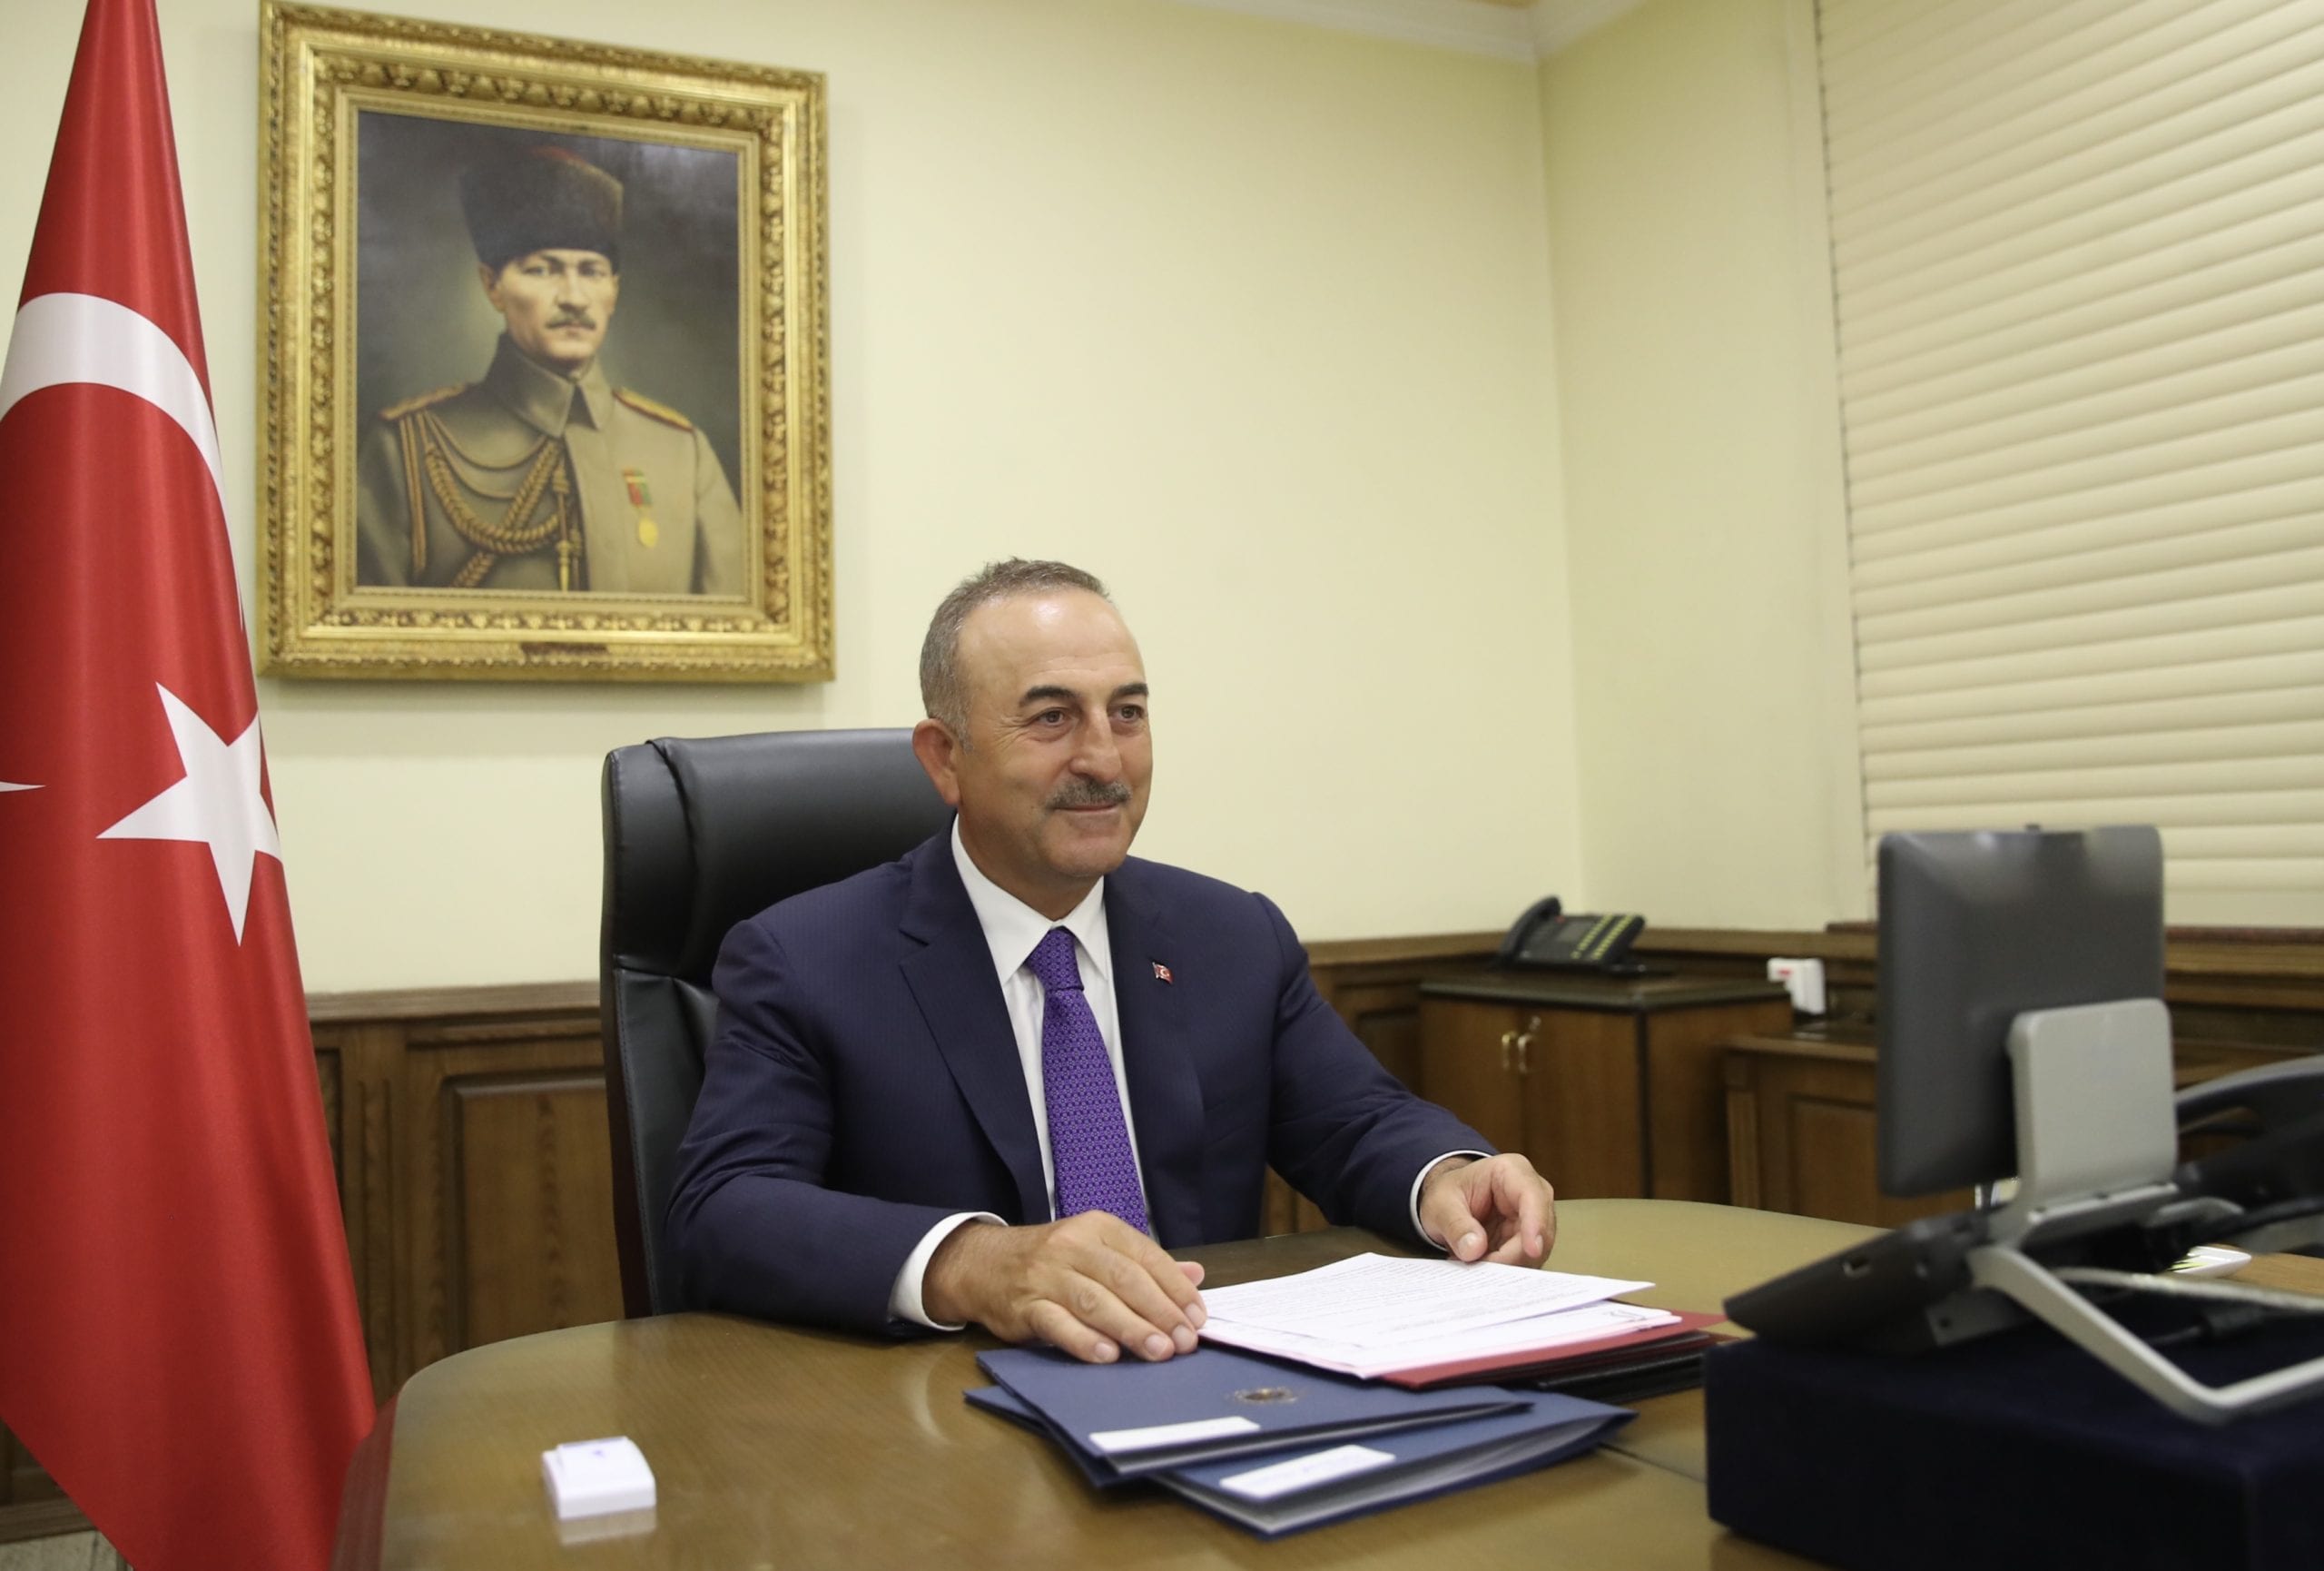 Tourists want to come back to visit Turkey, FM Çavuşoğlu says